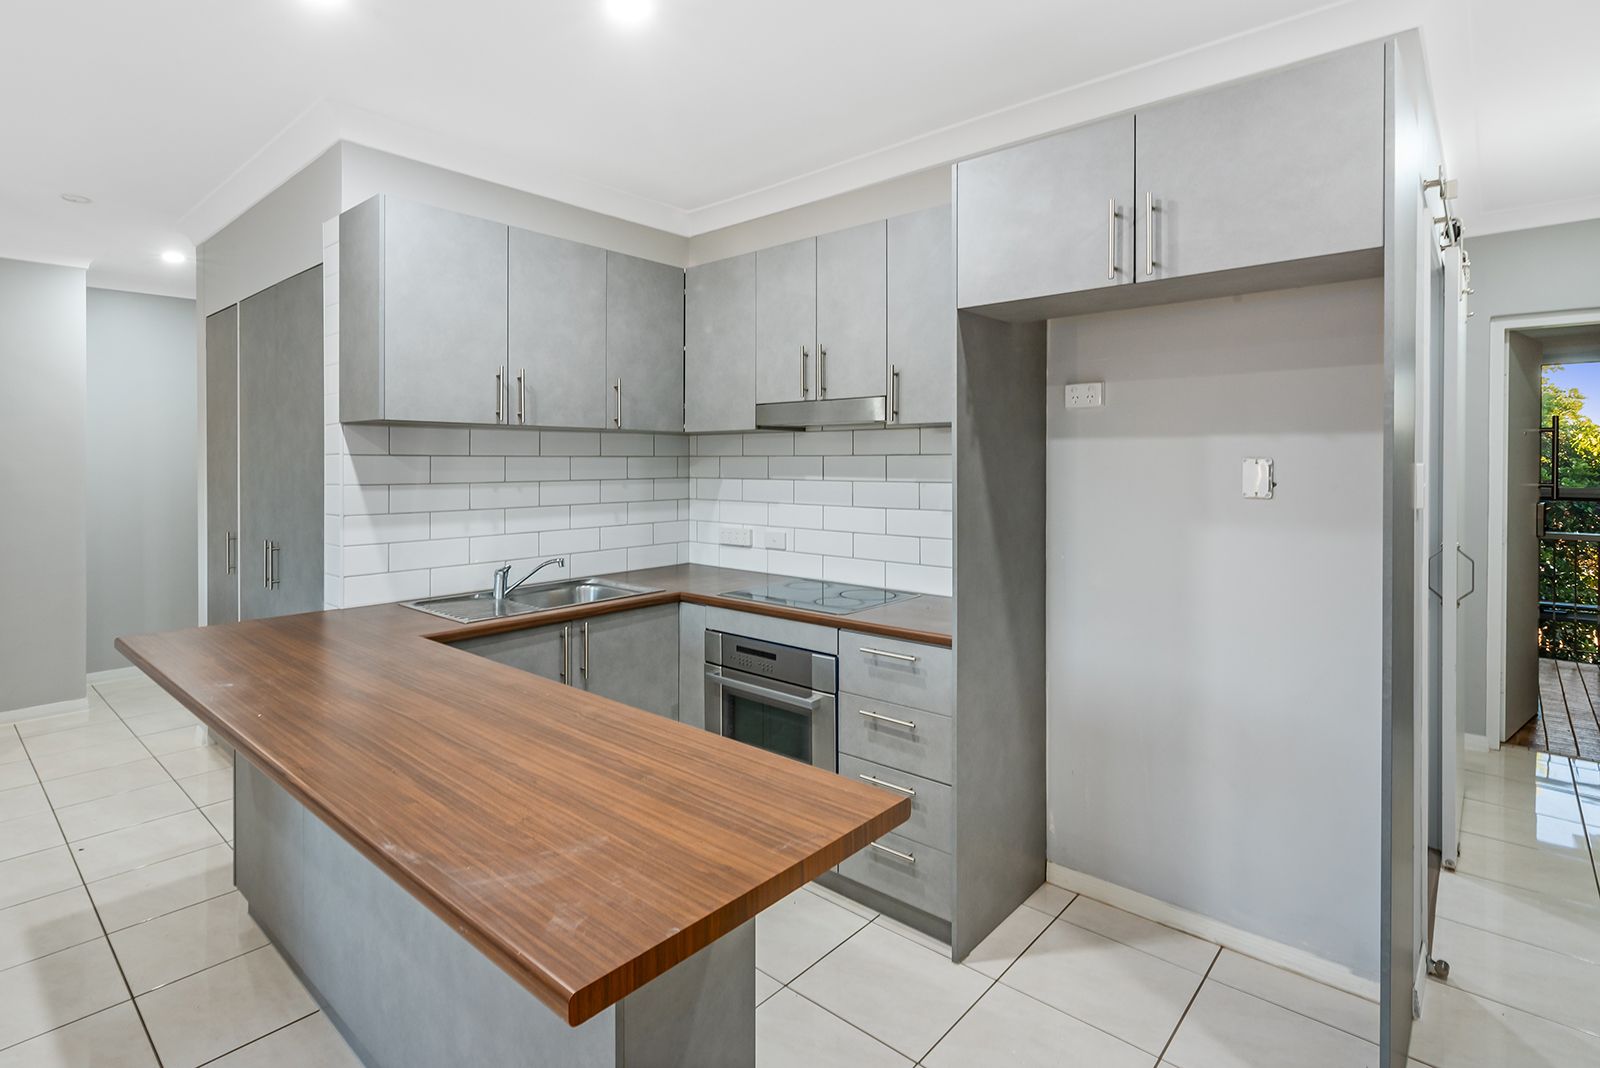 2 bedrooms Apartment / Unit / Flat in 6/21 Vine Street ASCOT QLD, 4007